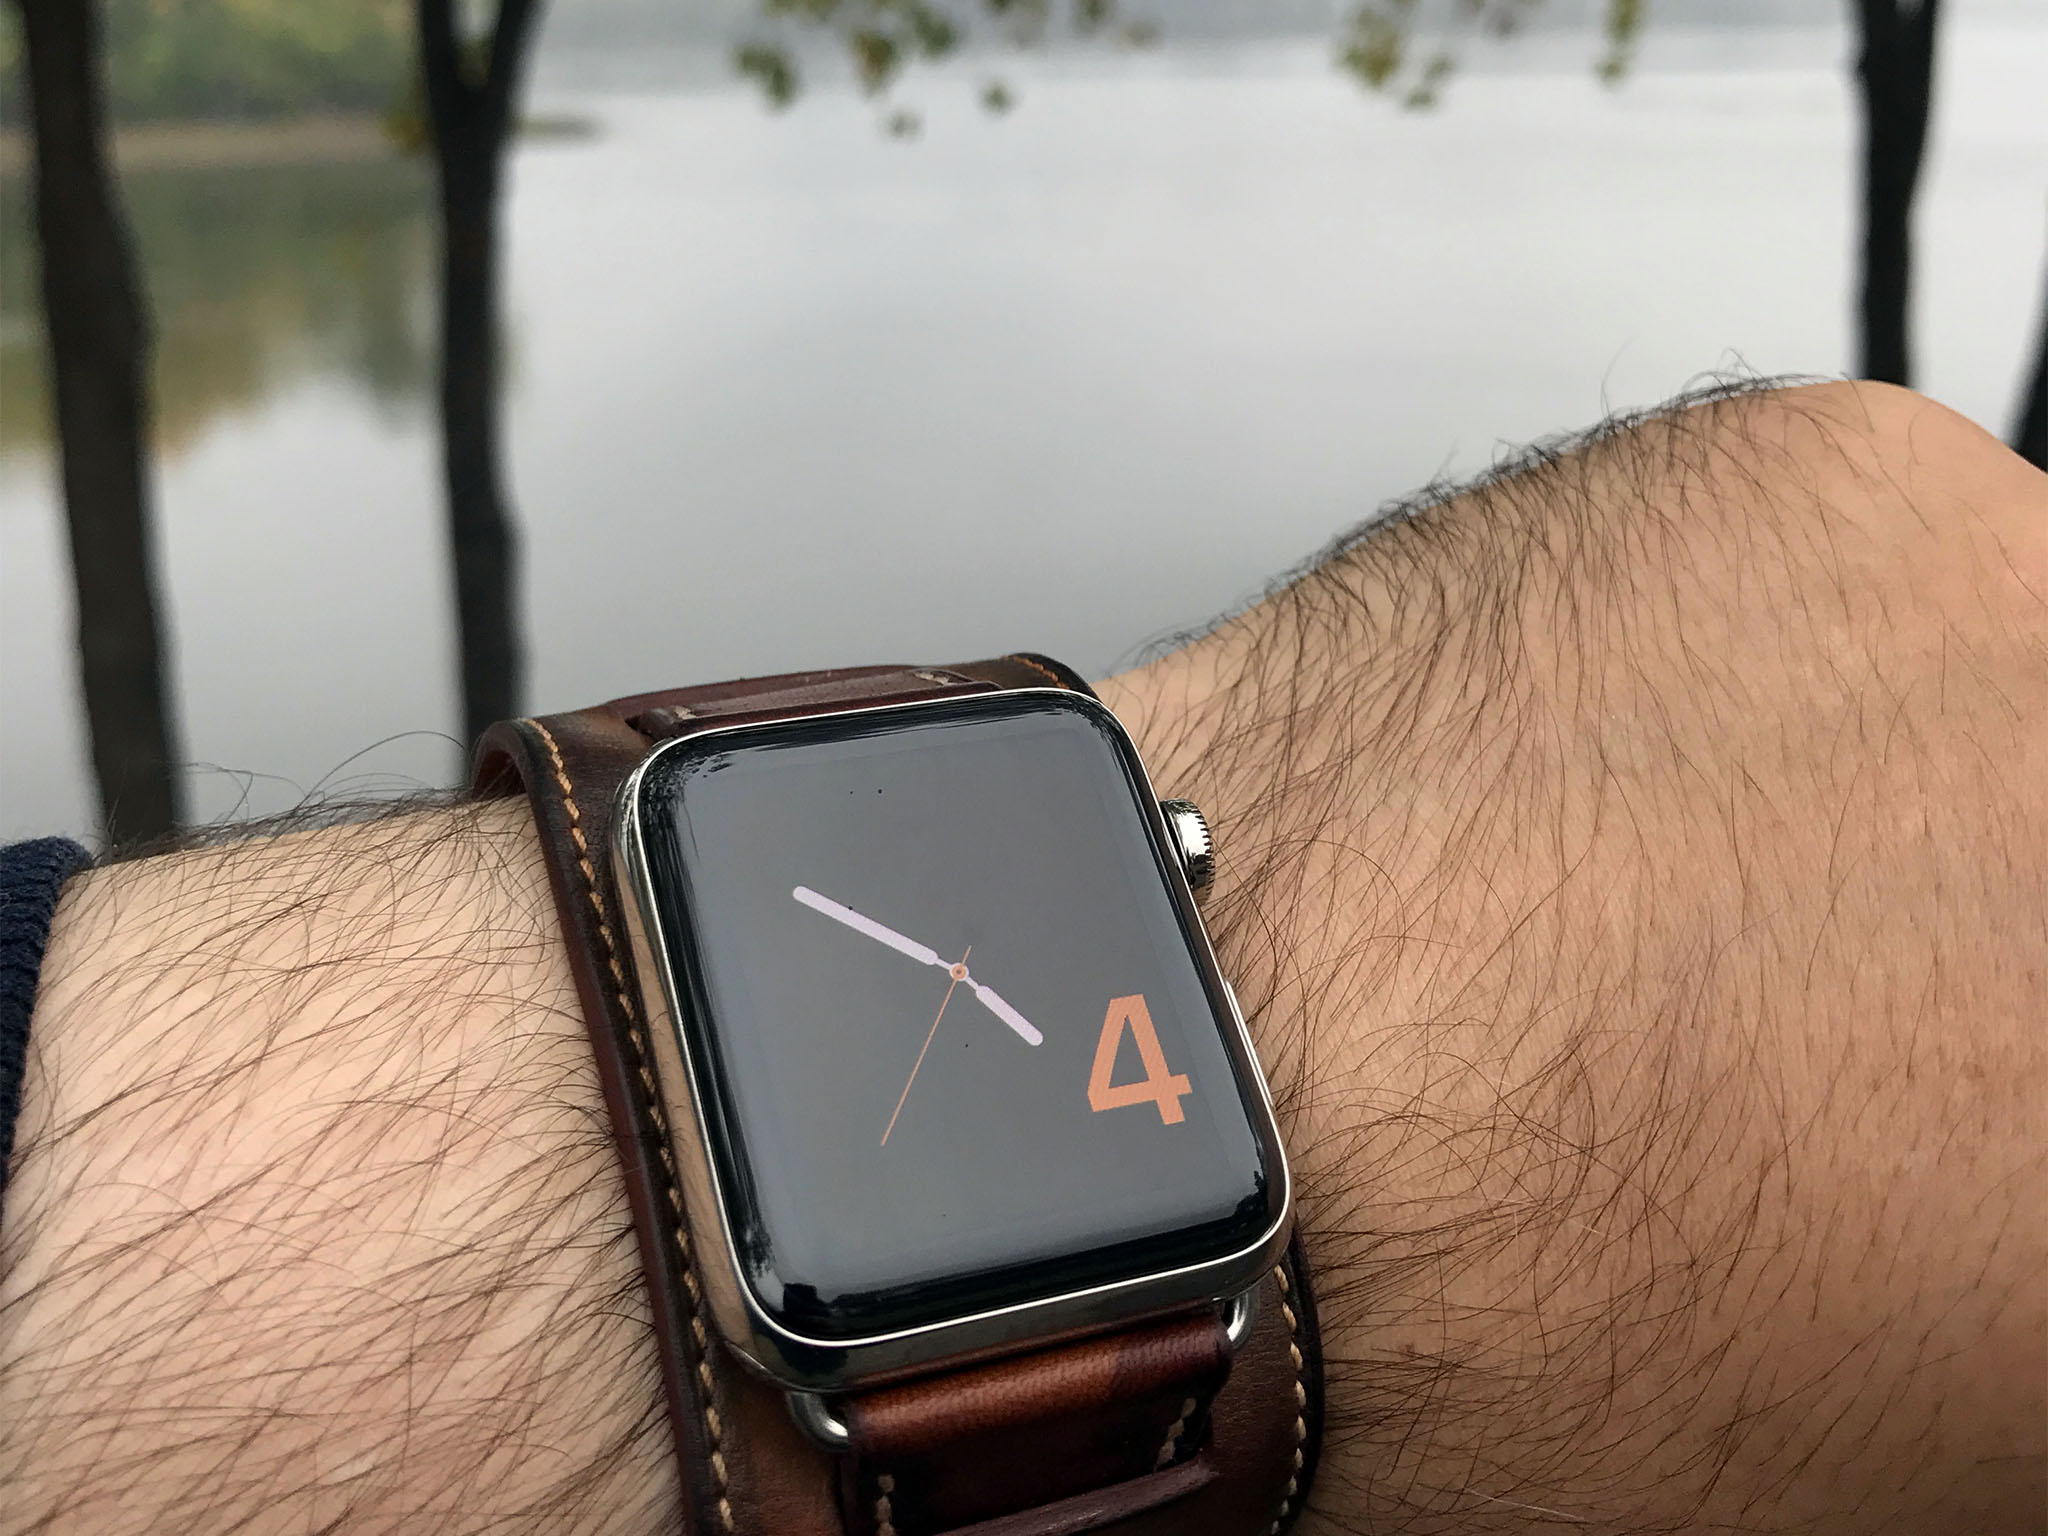 Apple watch 1 поколения. Apple watch 2 поколения. Apple watch Series se Gen 2. Apple watch 2 на руке. Watchface with seconds.